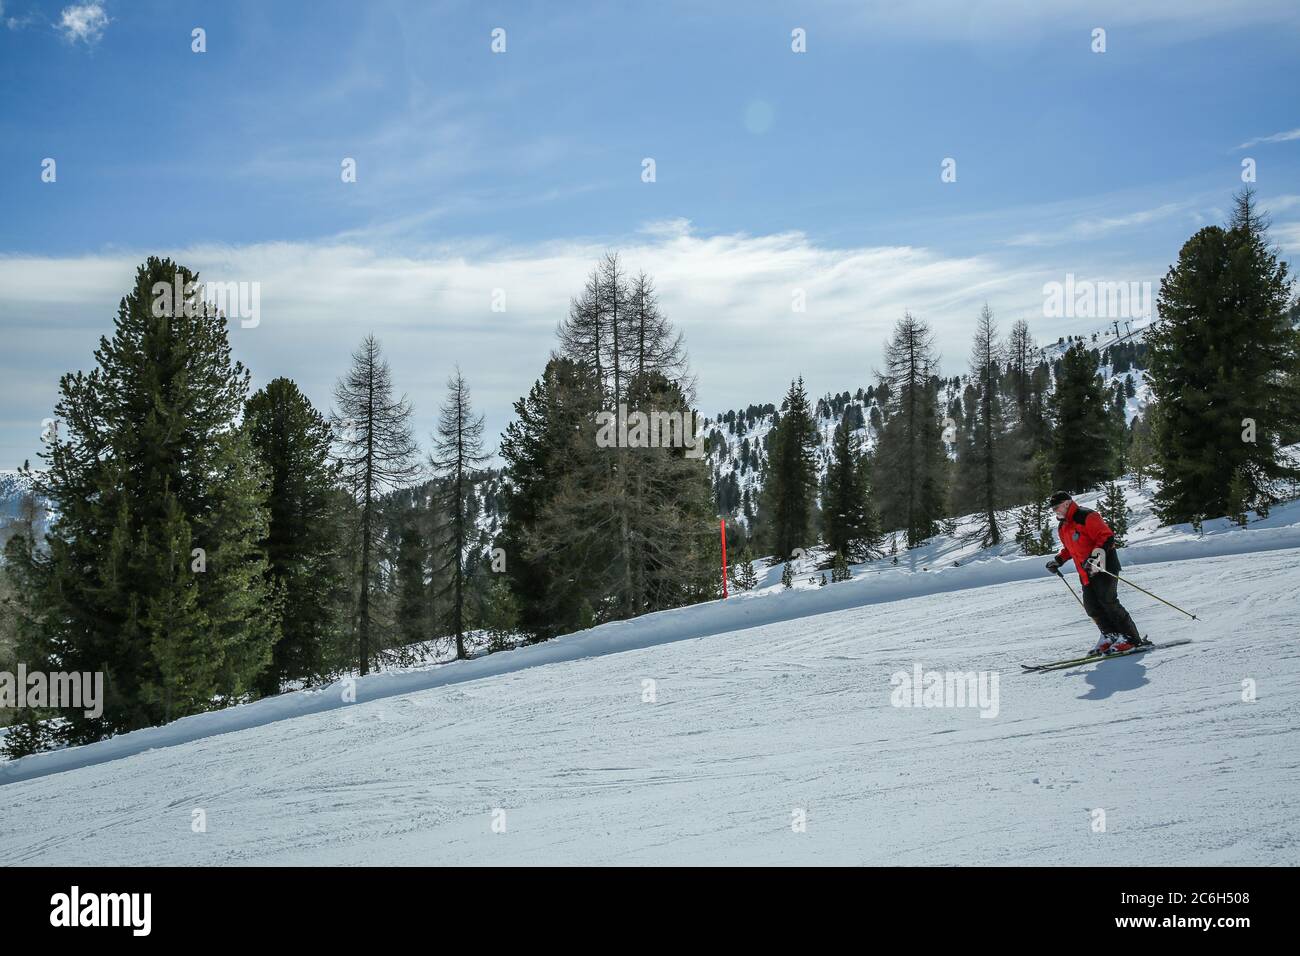 KREISCHBERG, MURAU, AUSTRIA - MARCH 15, 2017: Man skier running downhill on sunny alpine slope Stock Photo